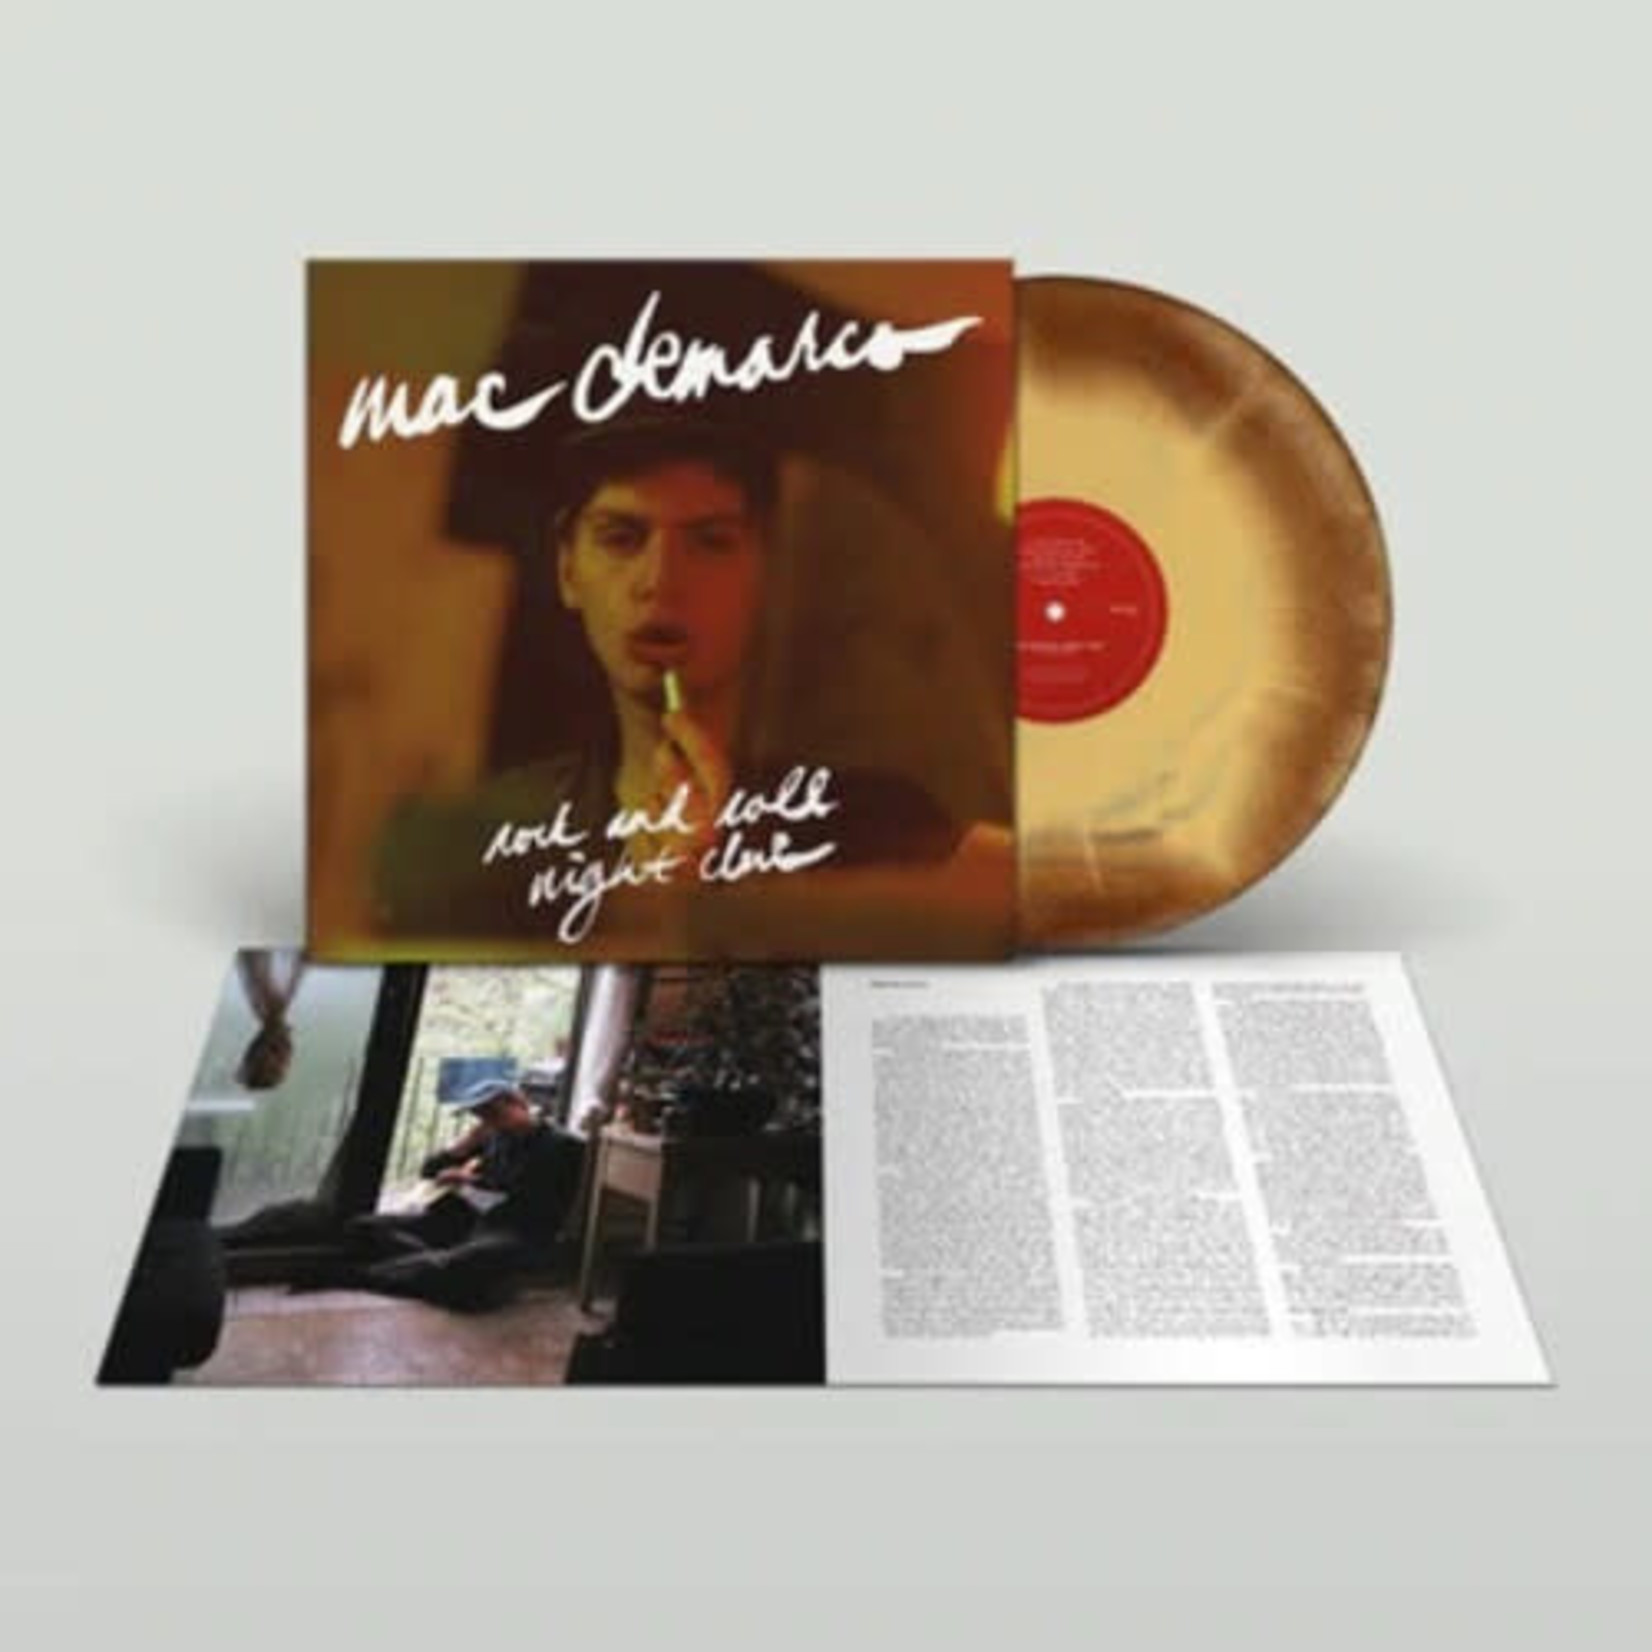 [New] Mac DeMarco - Rock And Roll Night Club (brown & custard vinyl)